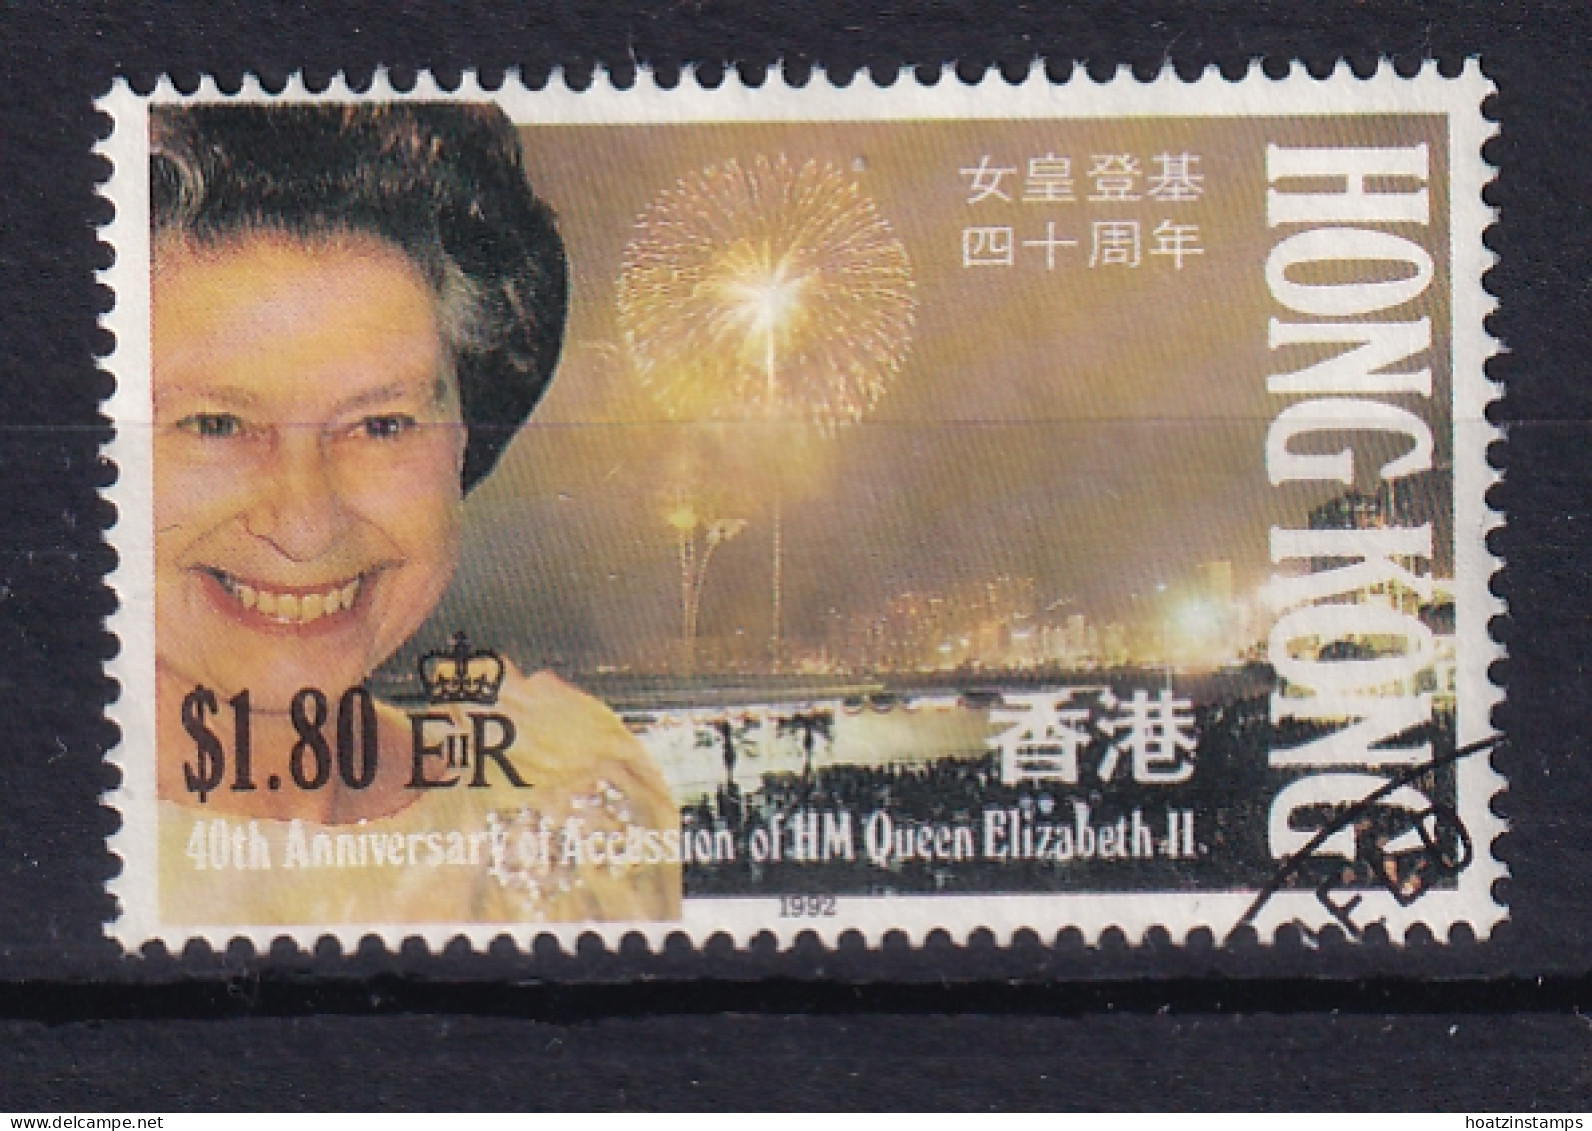 Hong Kong: 1992   40th Anniv Of QE II Accession   SG693    $1.80   Used  - Usati